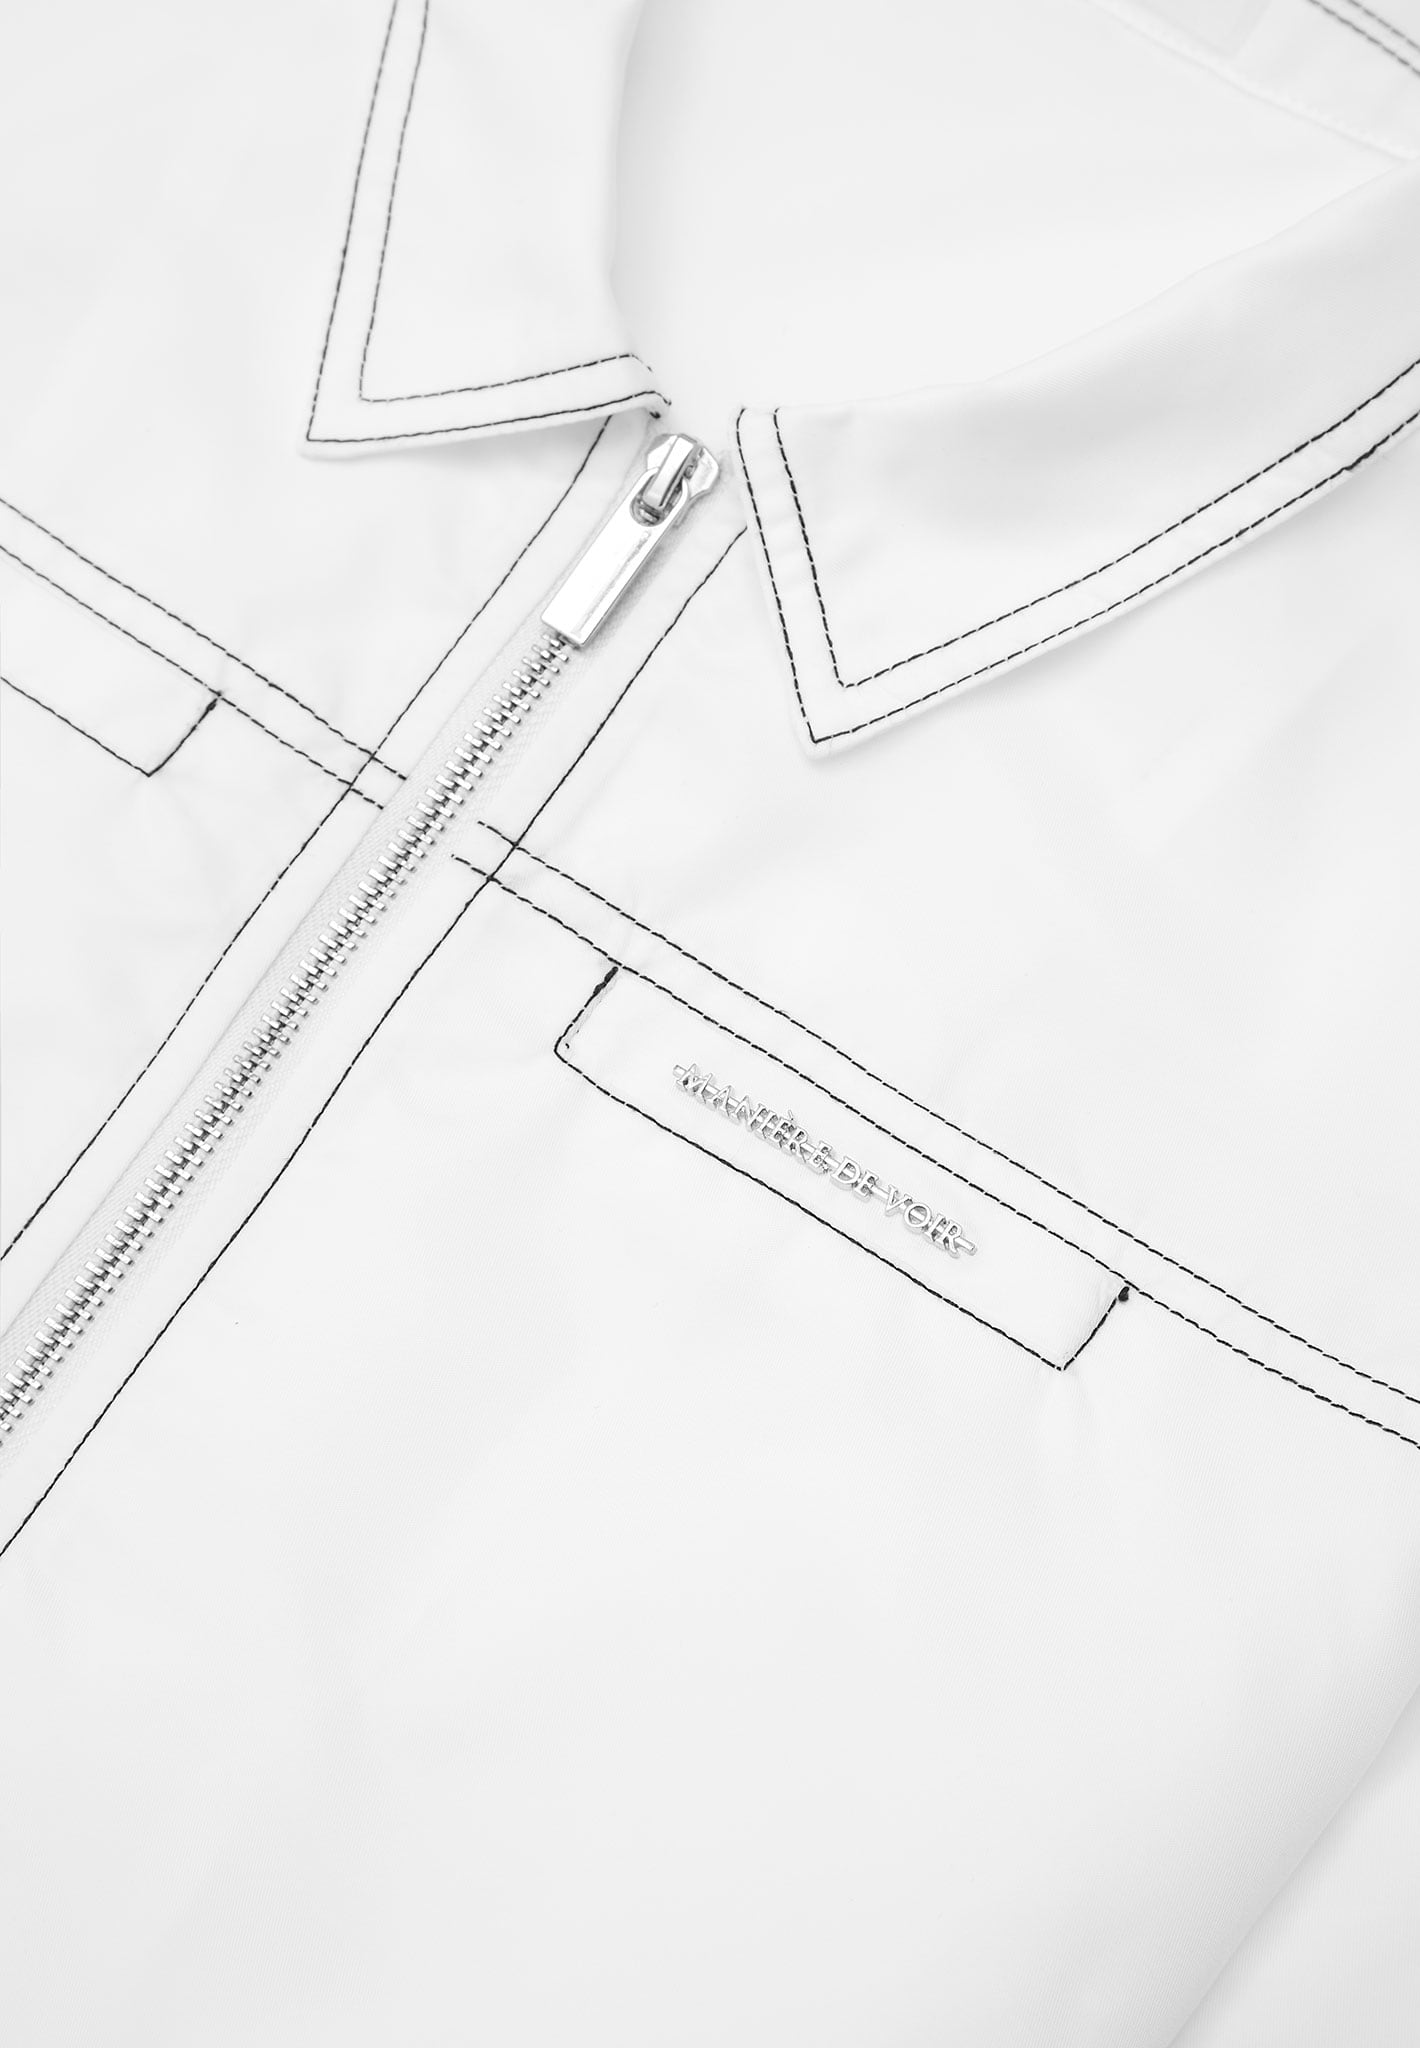 nylon-contrast-stitch-track-jacket-white